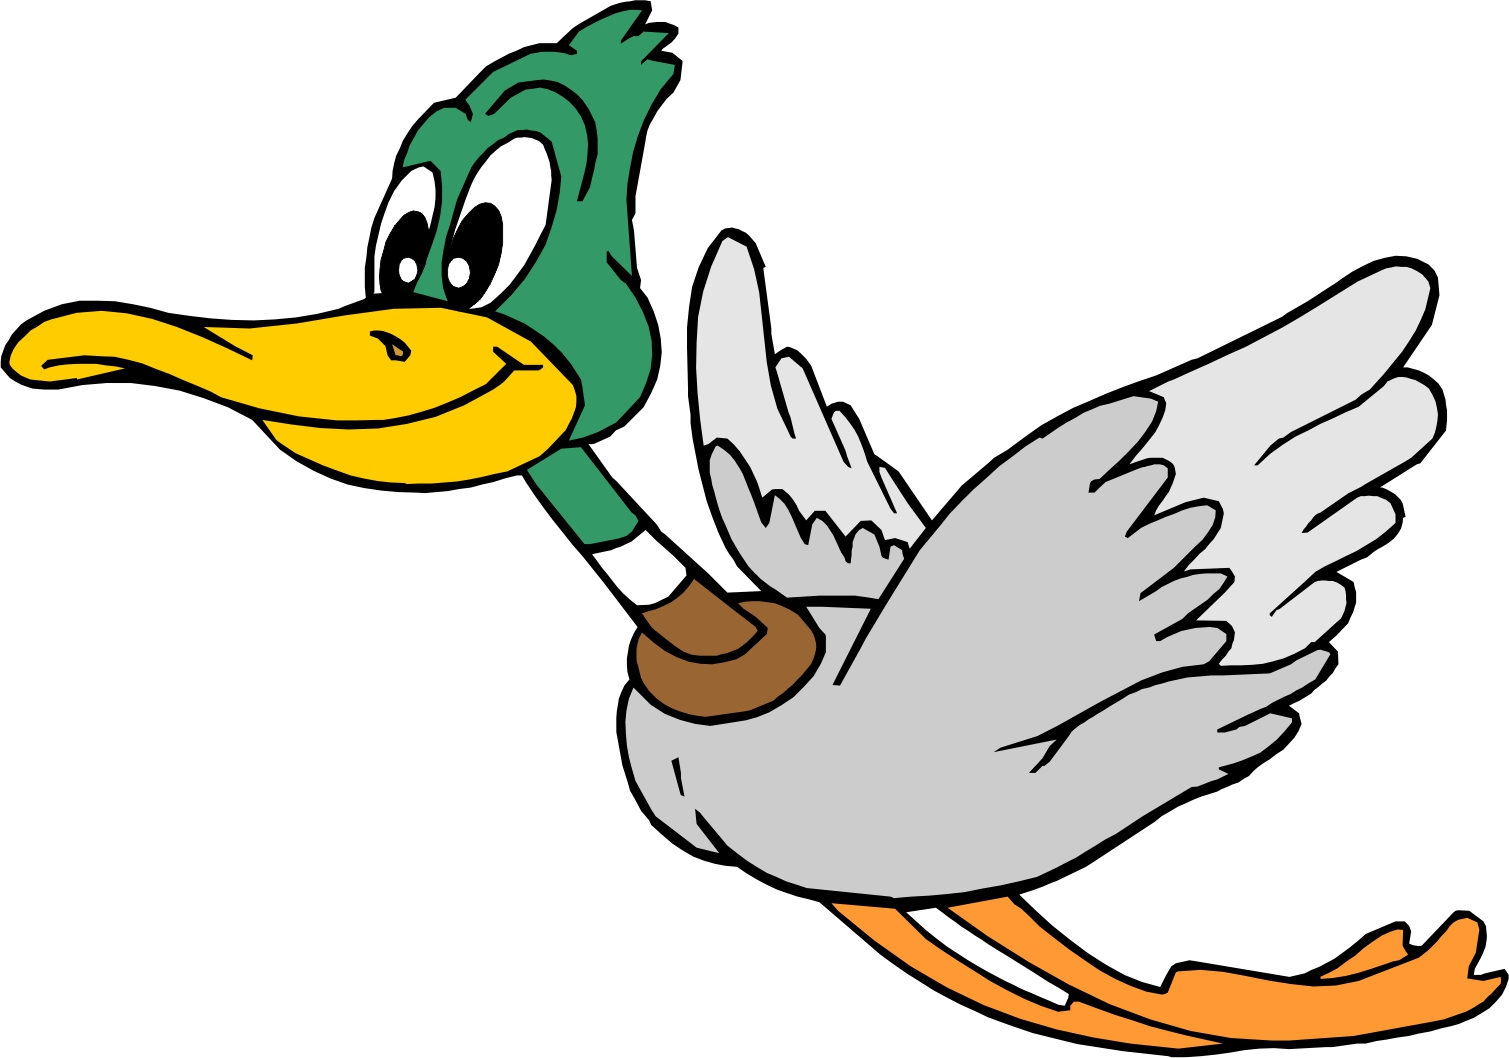 Cartoon Ducks Images - ClipArt Best